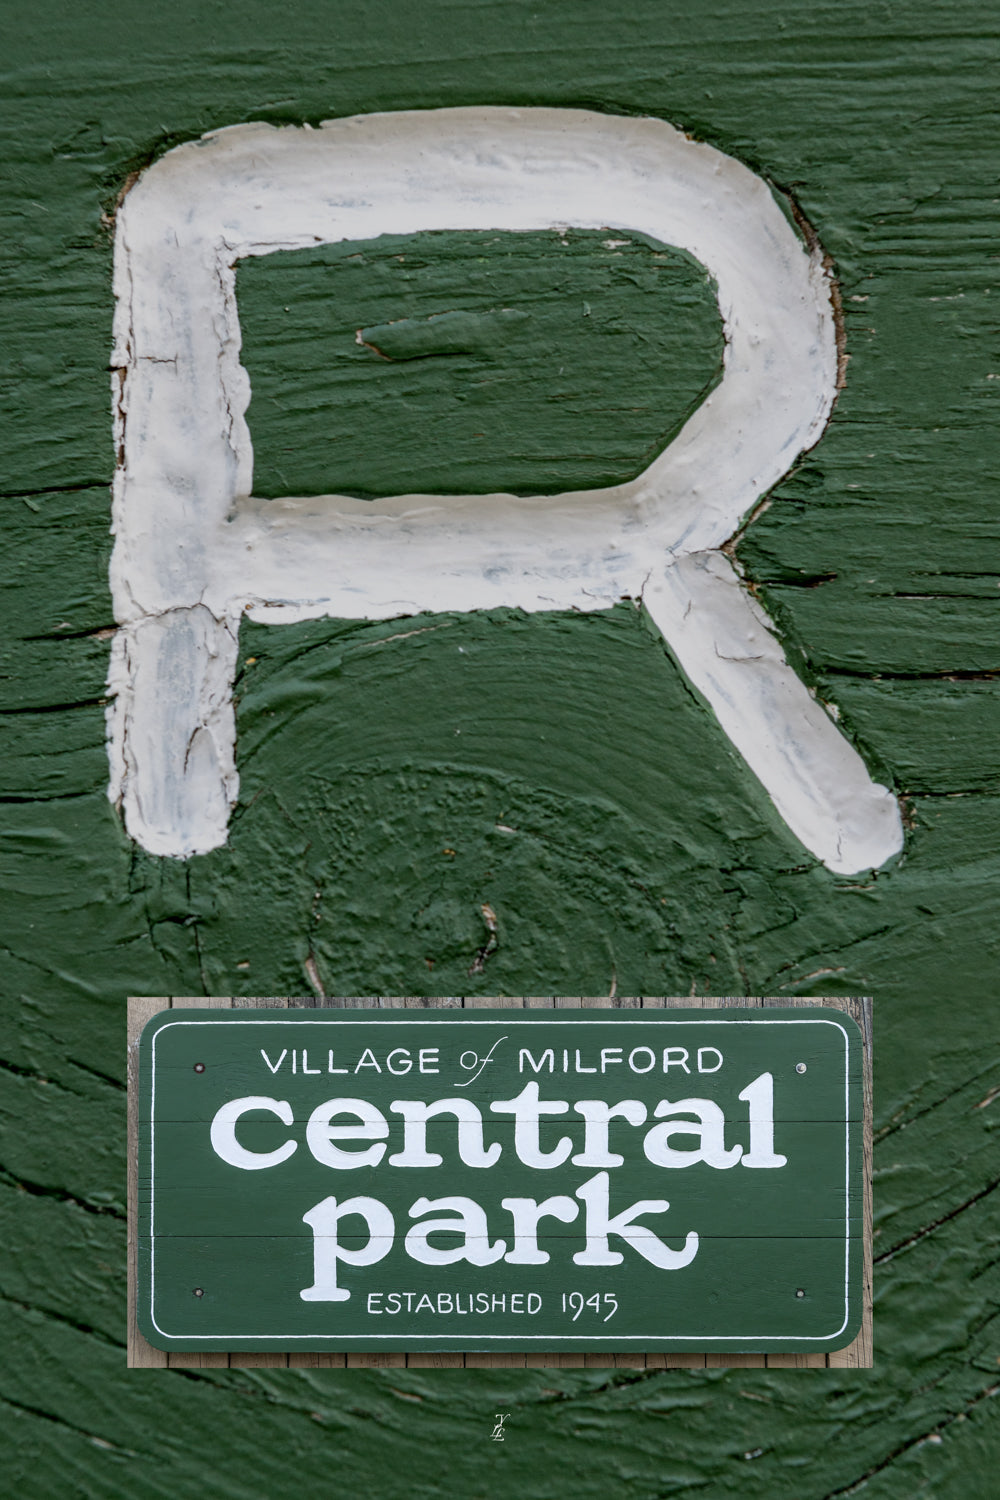 Unique Photo Letter Art, Milford, MI area letters used to keepsake letter art framed or in tiles